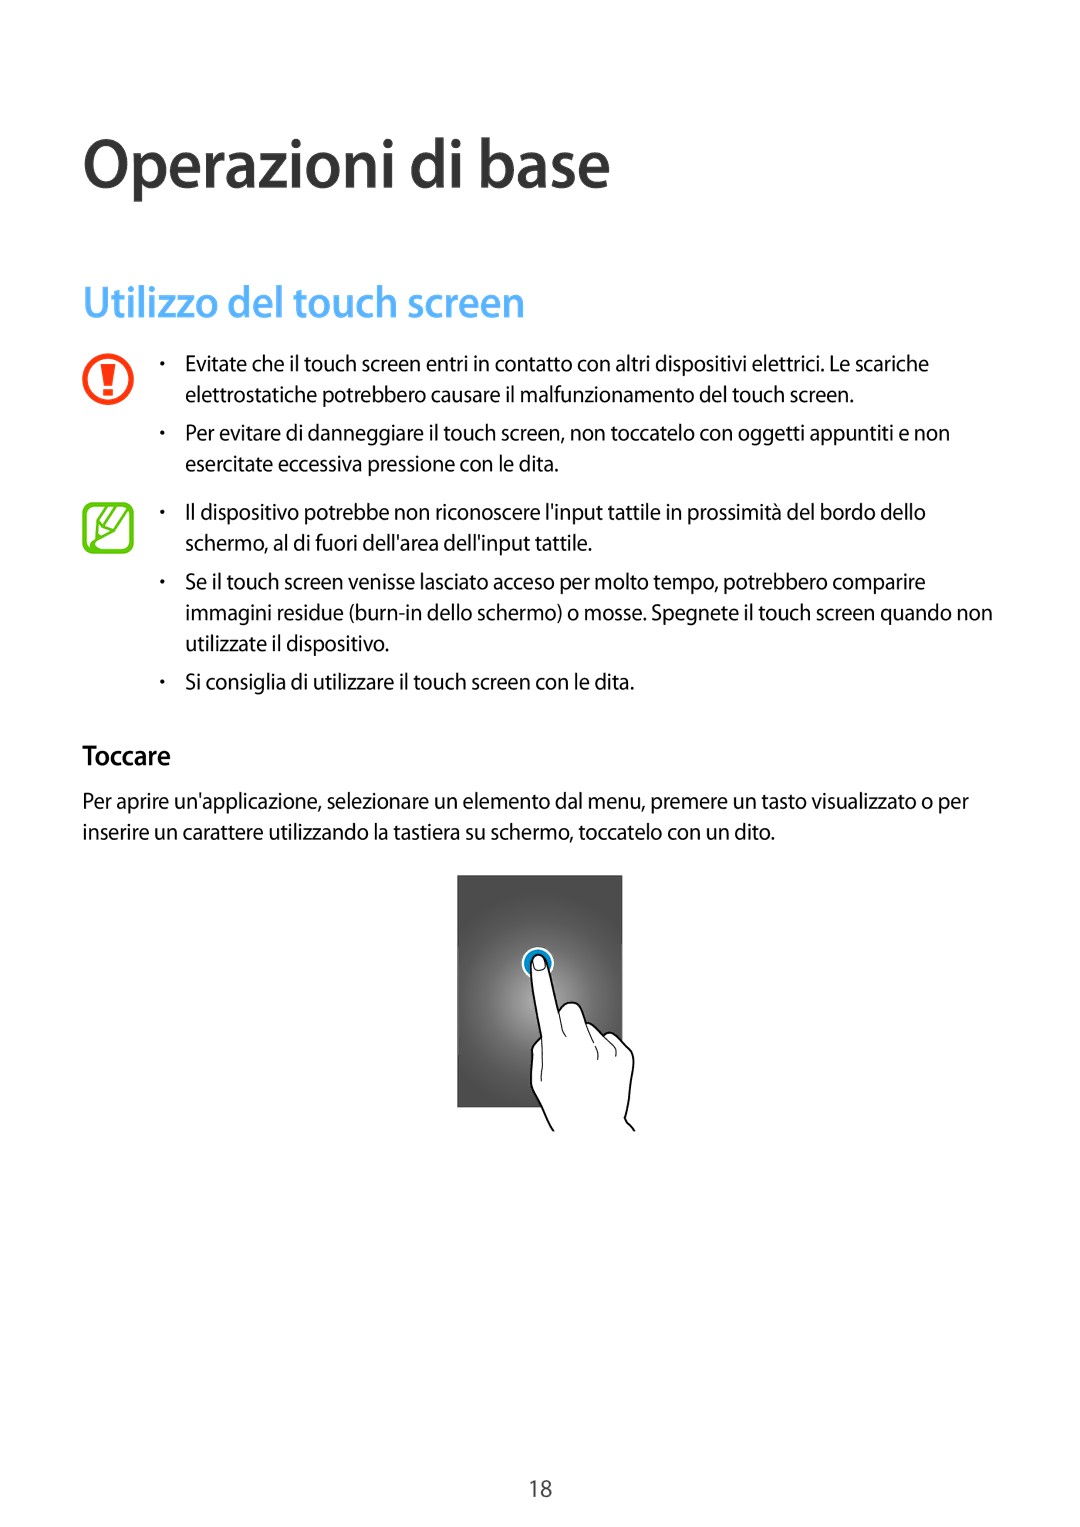 Samsung SM-A300FZSUTIM, SM-A300FZDUXEO, SM-A300FZWUDBT manual Operazioni di base, Utilizzo del touch screen, Toccare 